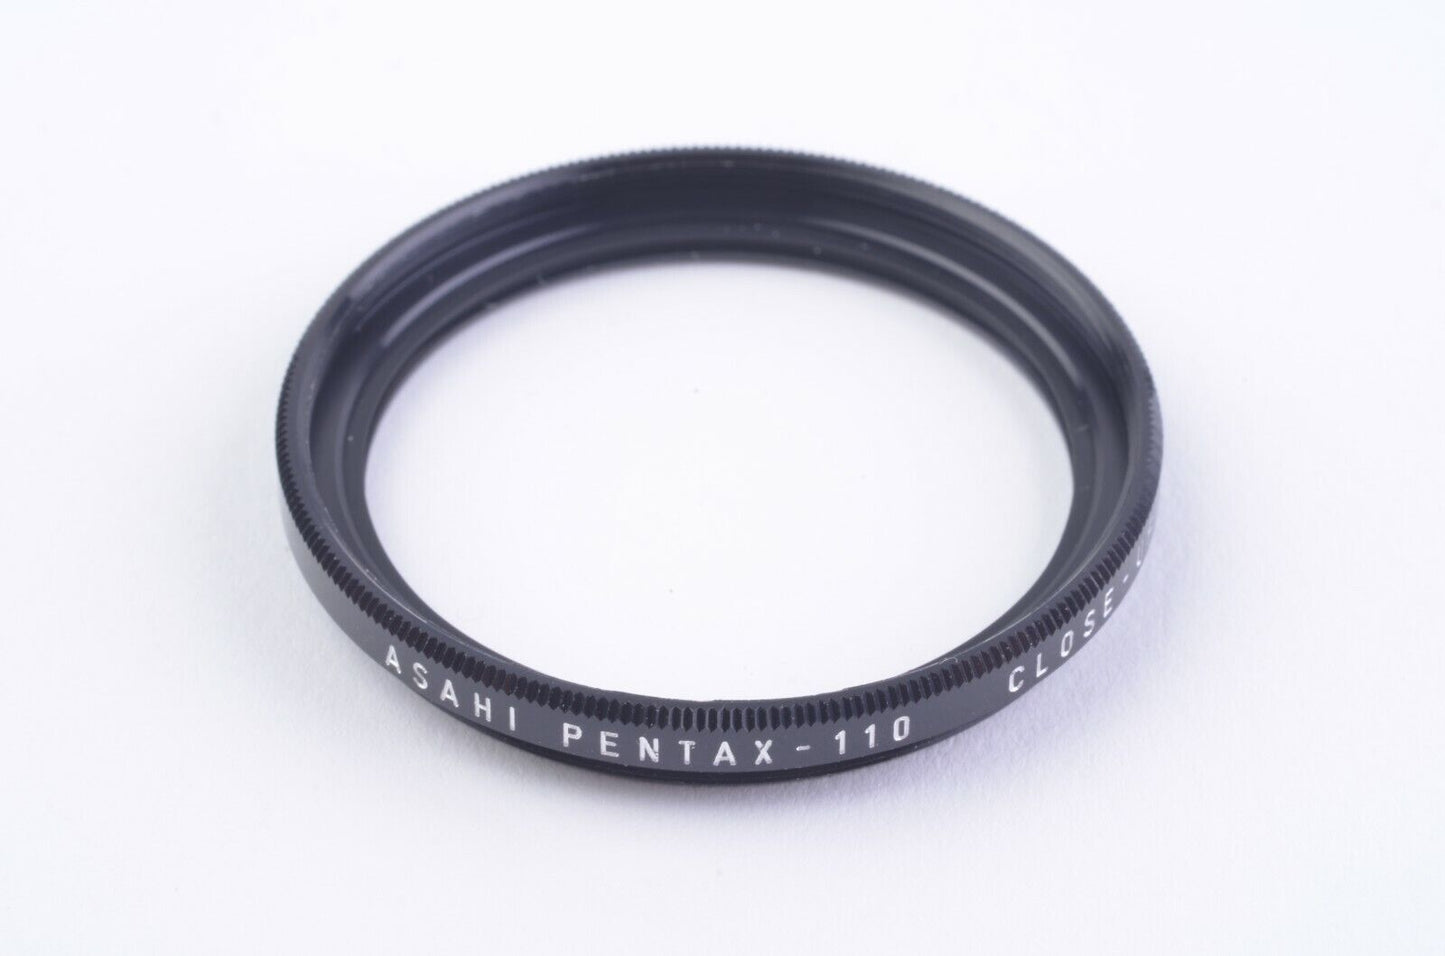 EXC++ GENUINE PENTAX-110 37.5mm T43 CLOSE-UP FILTER IN JEWEL CASE